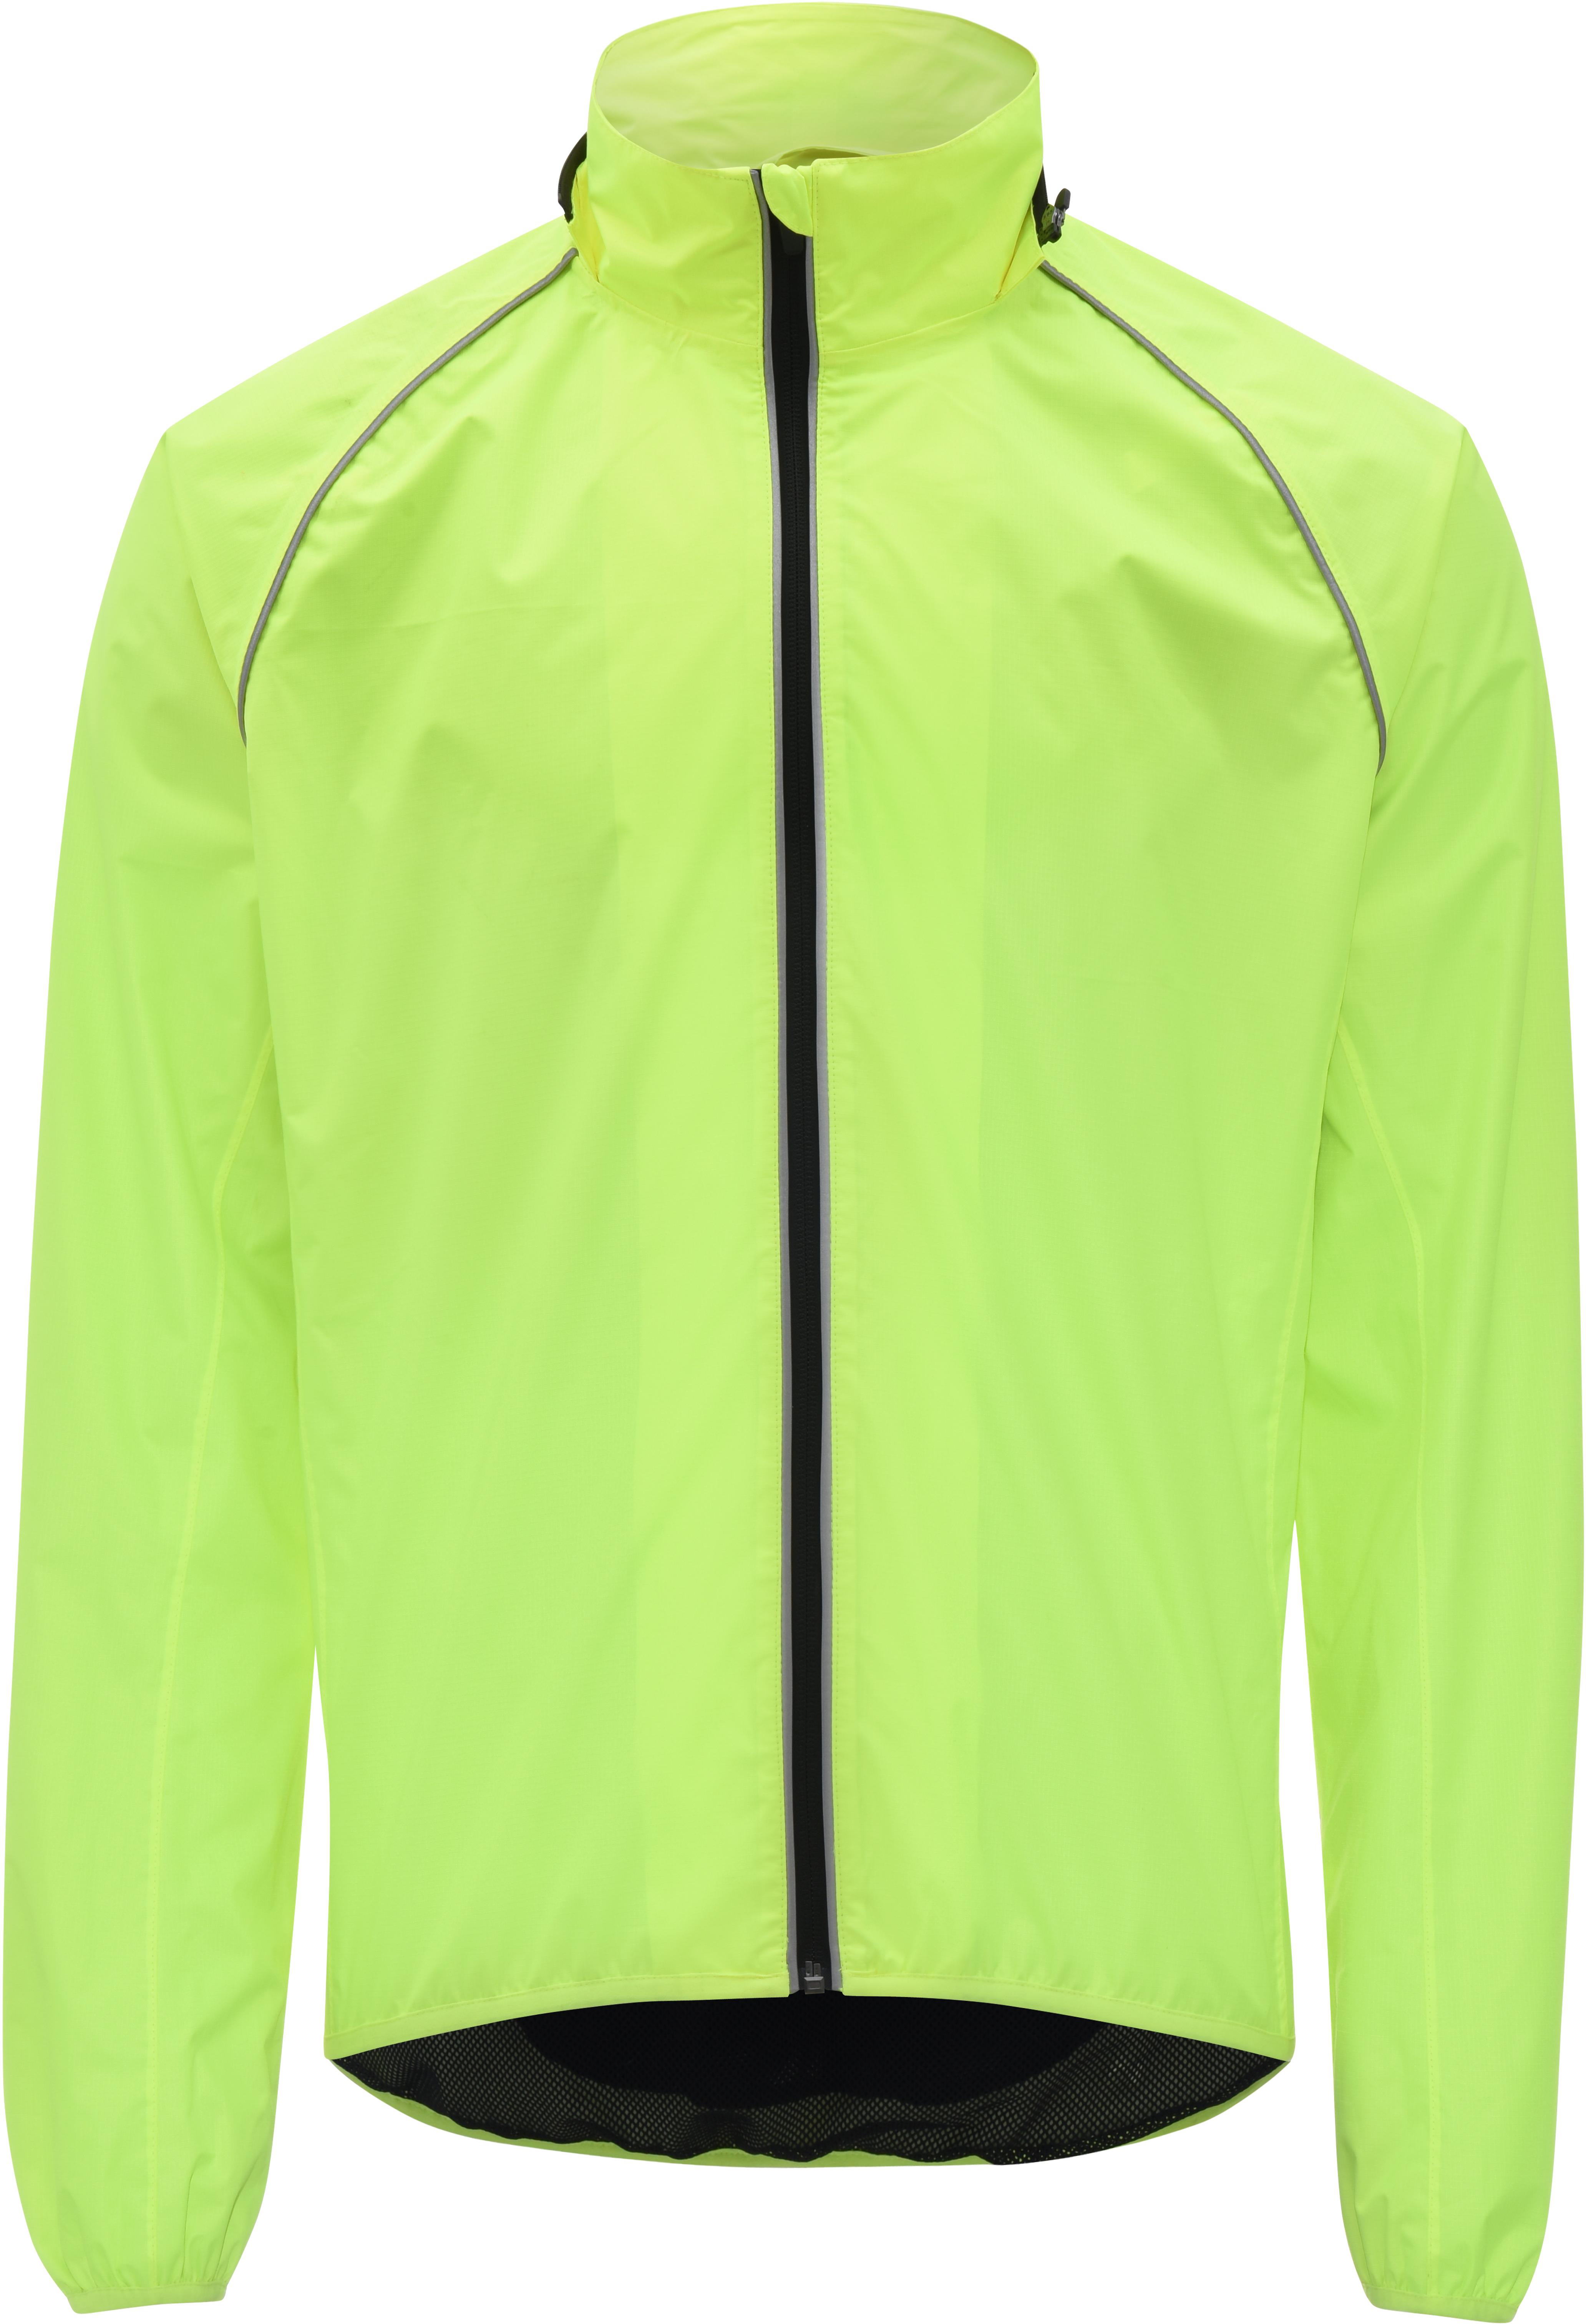 Ridge Unisex Waterproof Jacket - Fluorescent Yellow, Xxxl